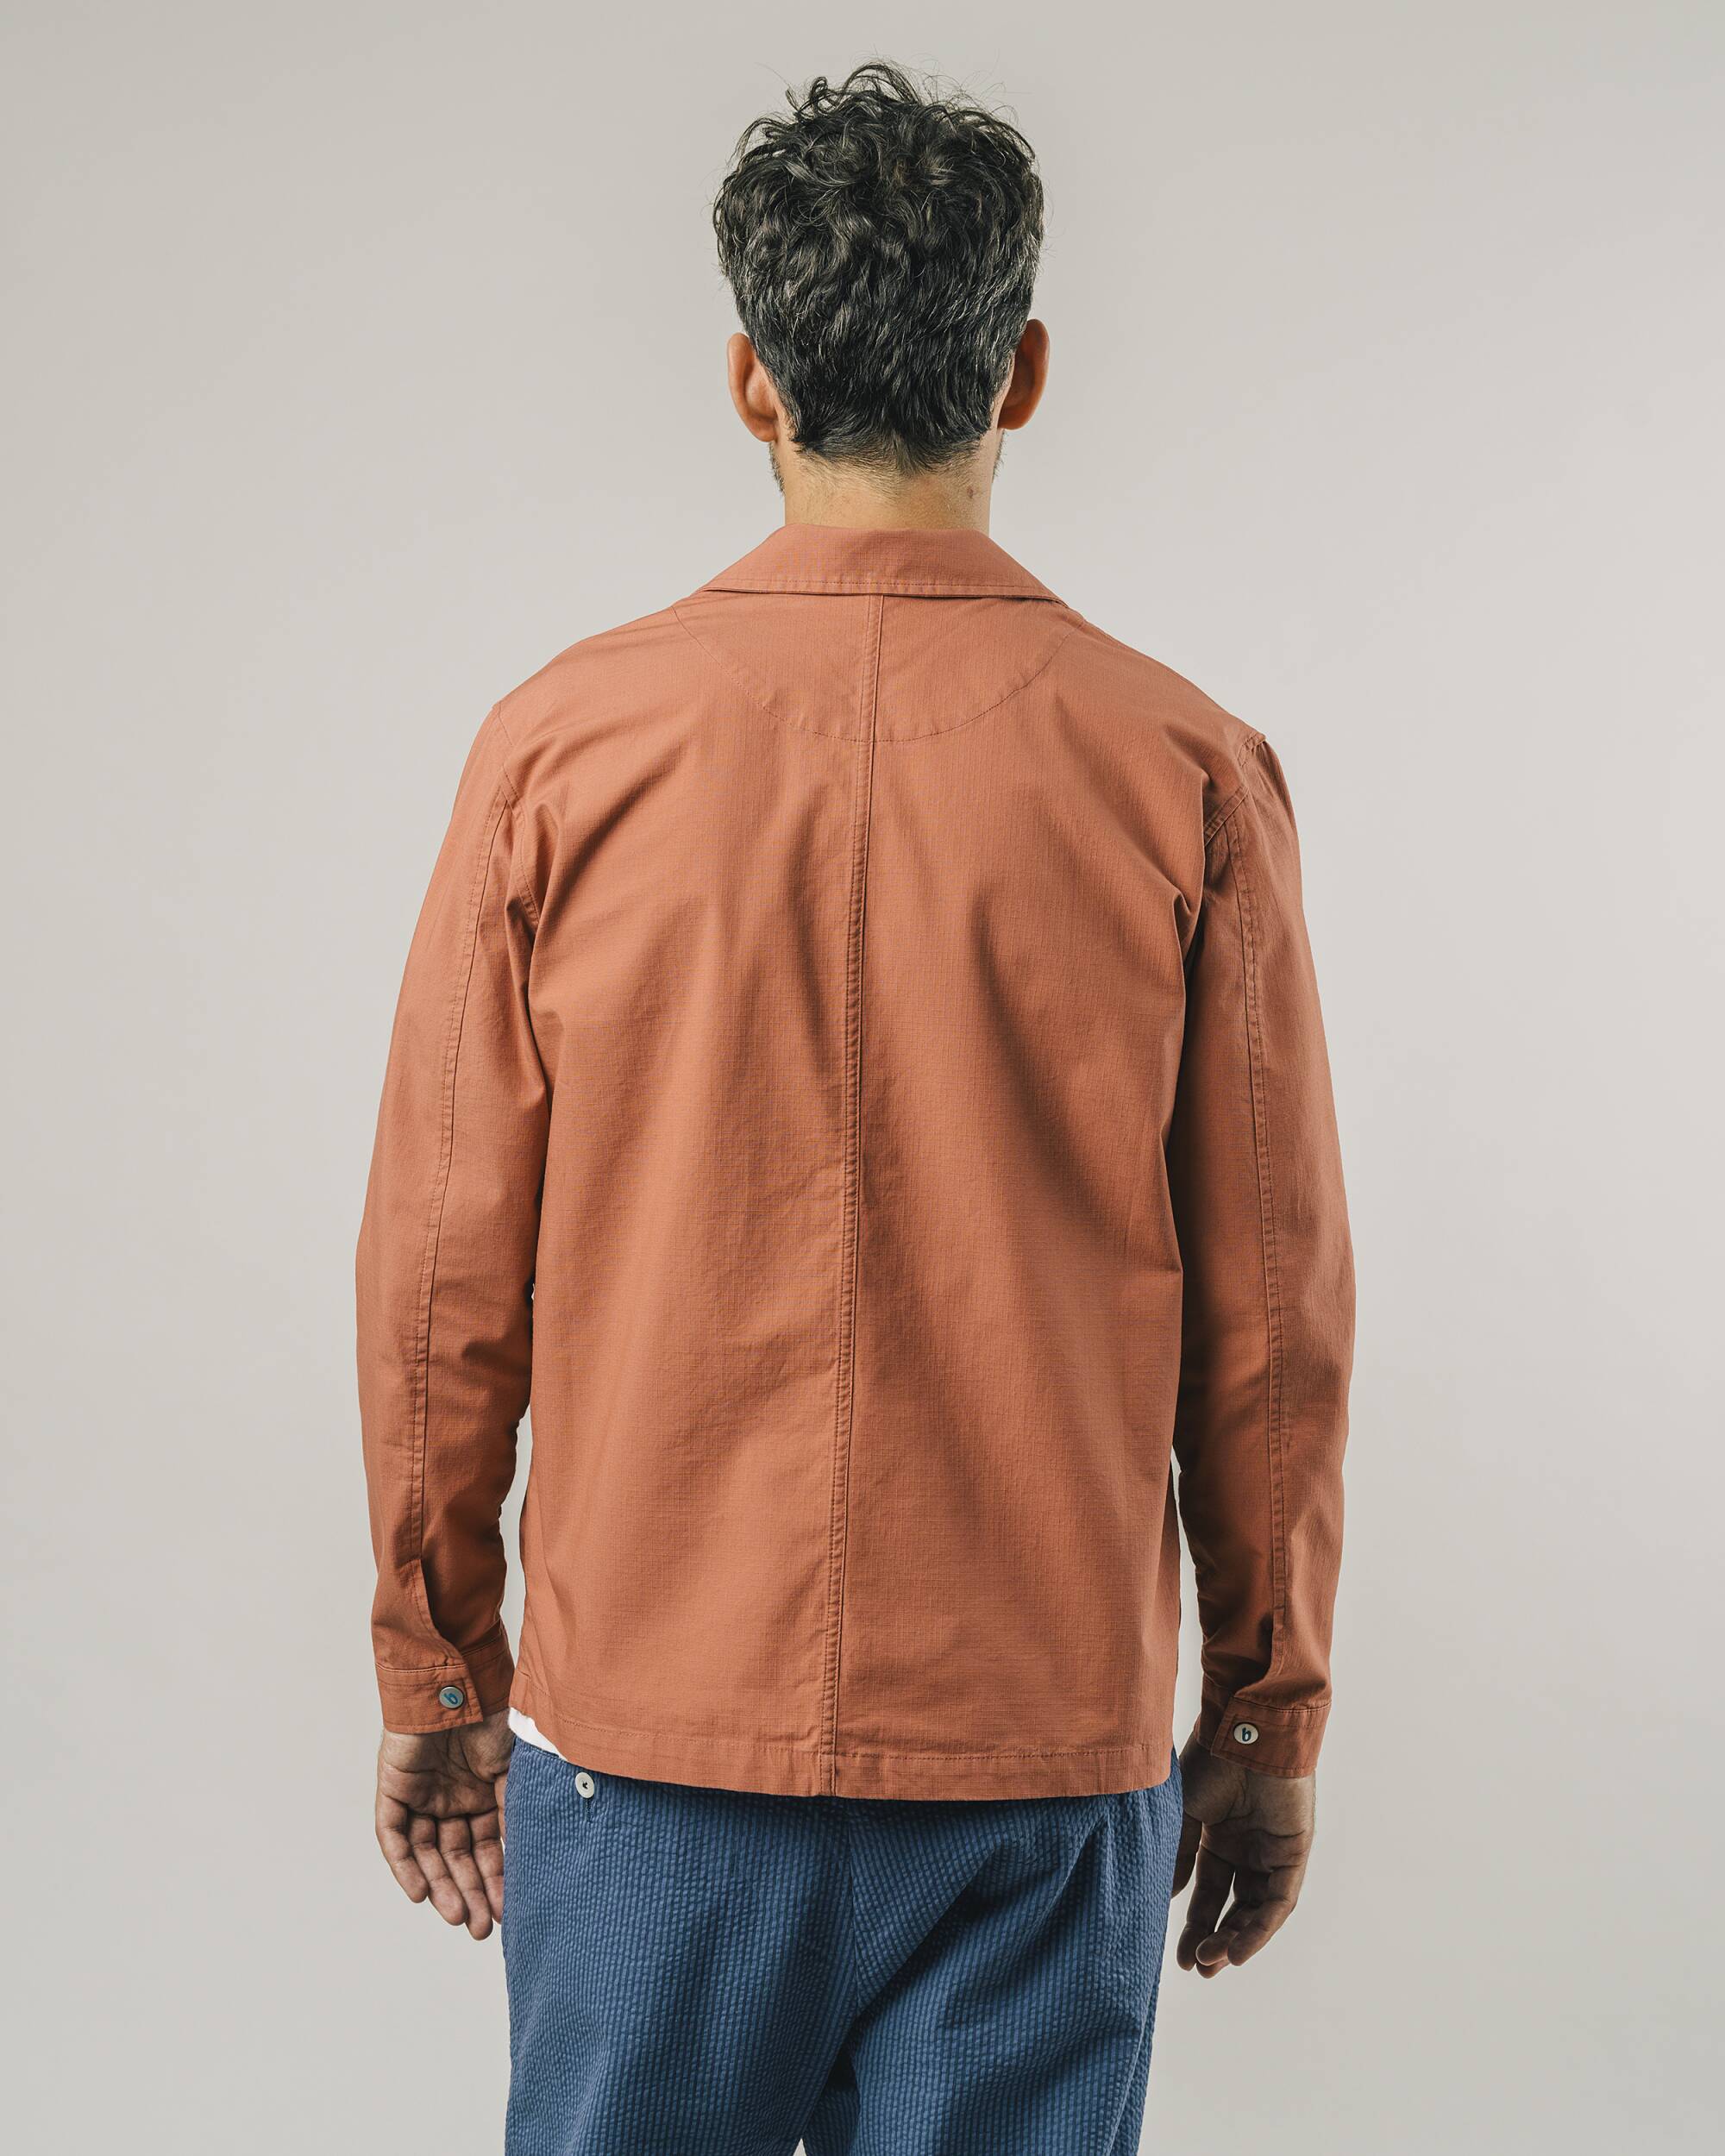 Orange organic cotton ripstop jacket from Brava Fabrics